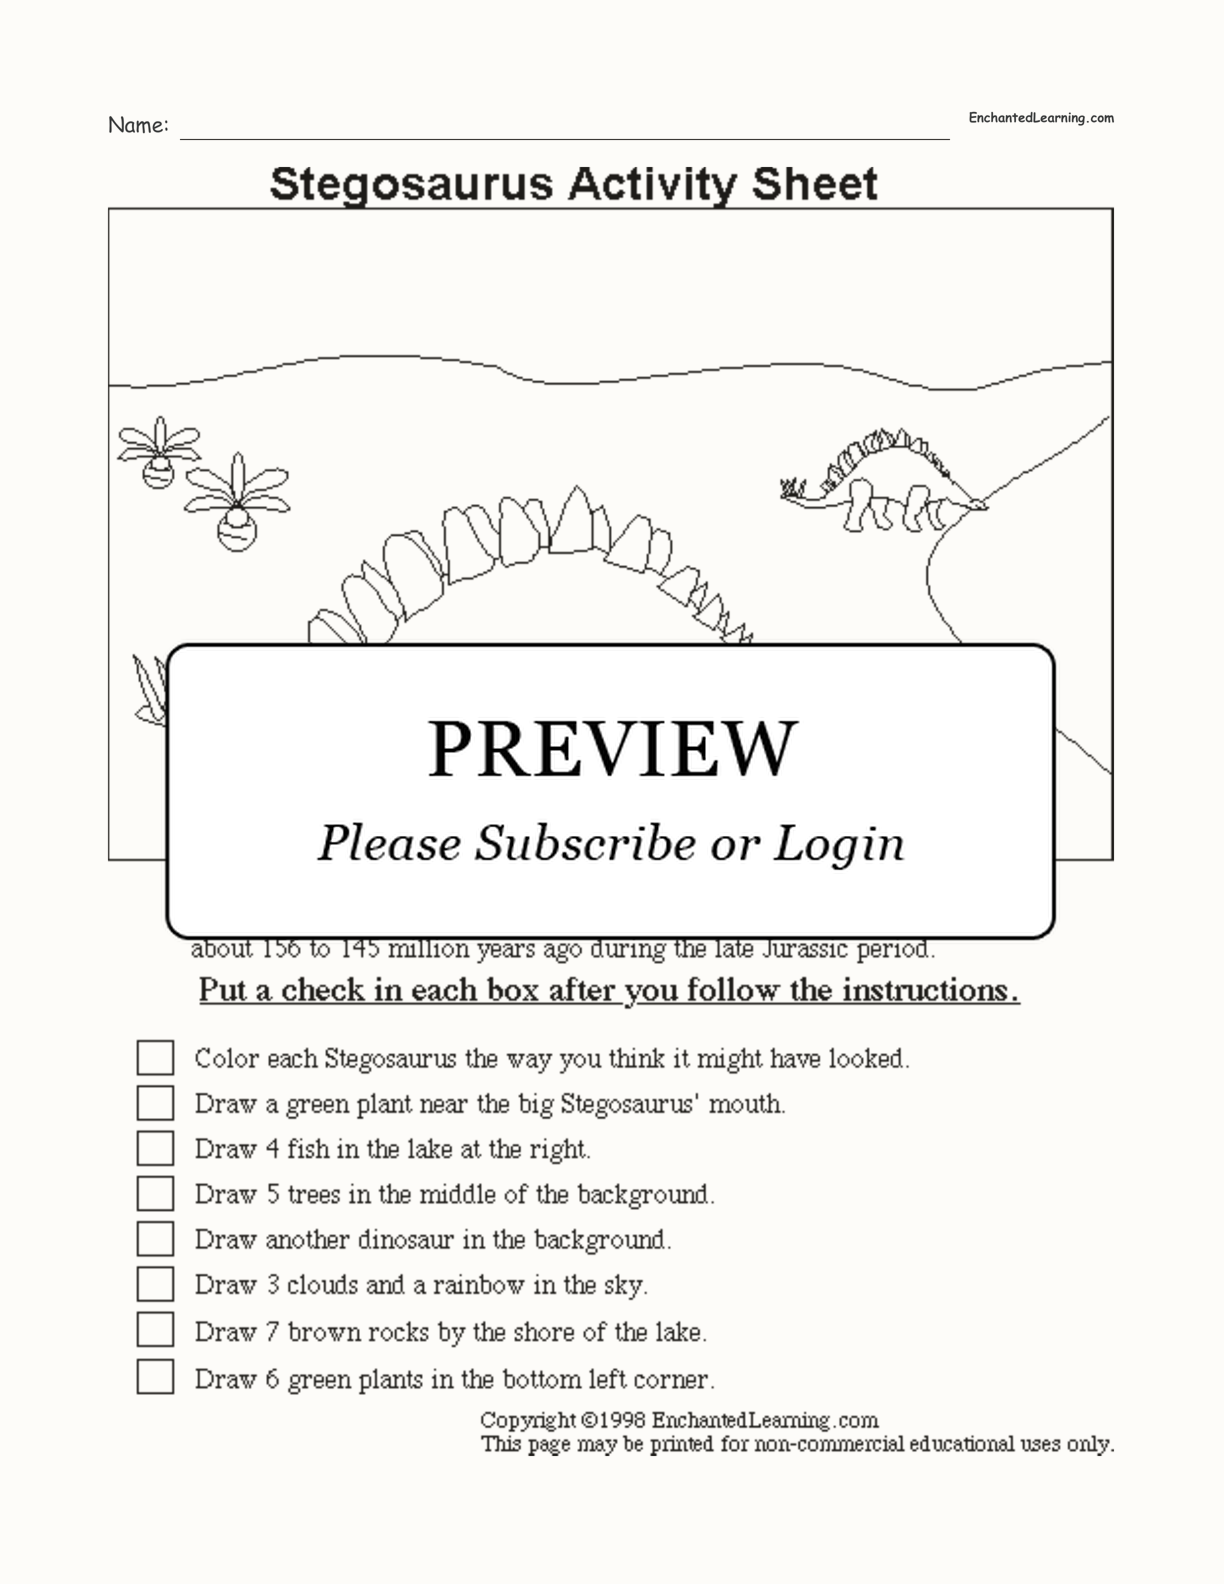 Stegosaurus Follow the Instructions Worksheet interactive worksheet page 1